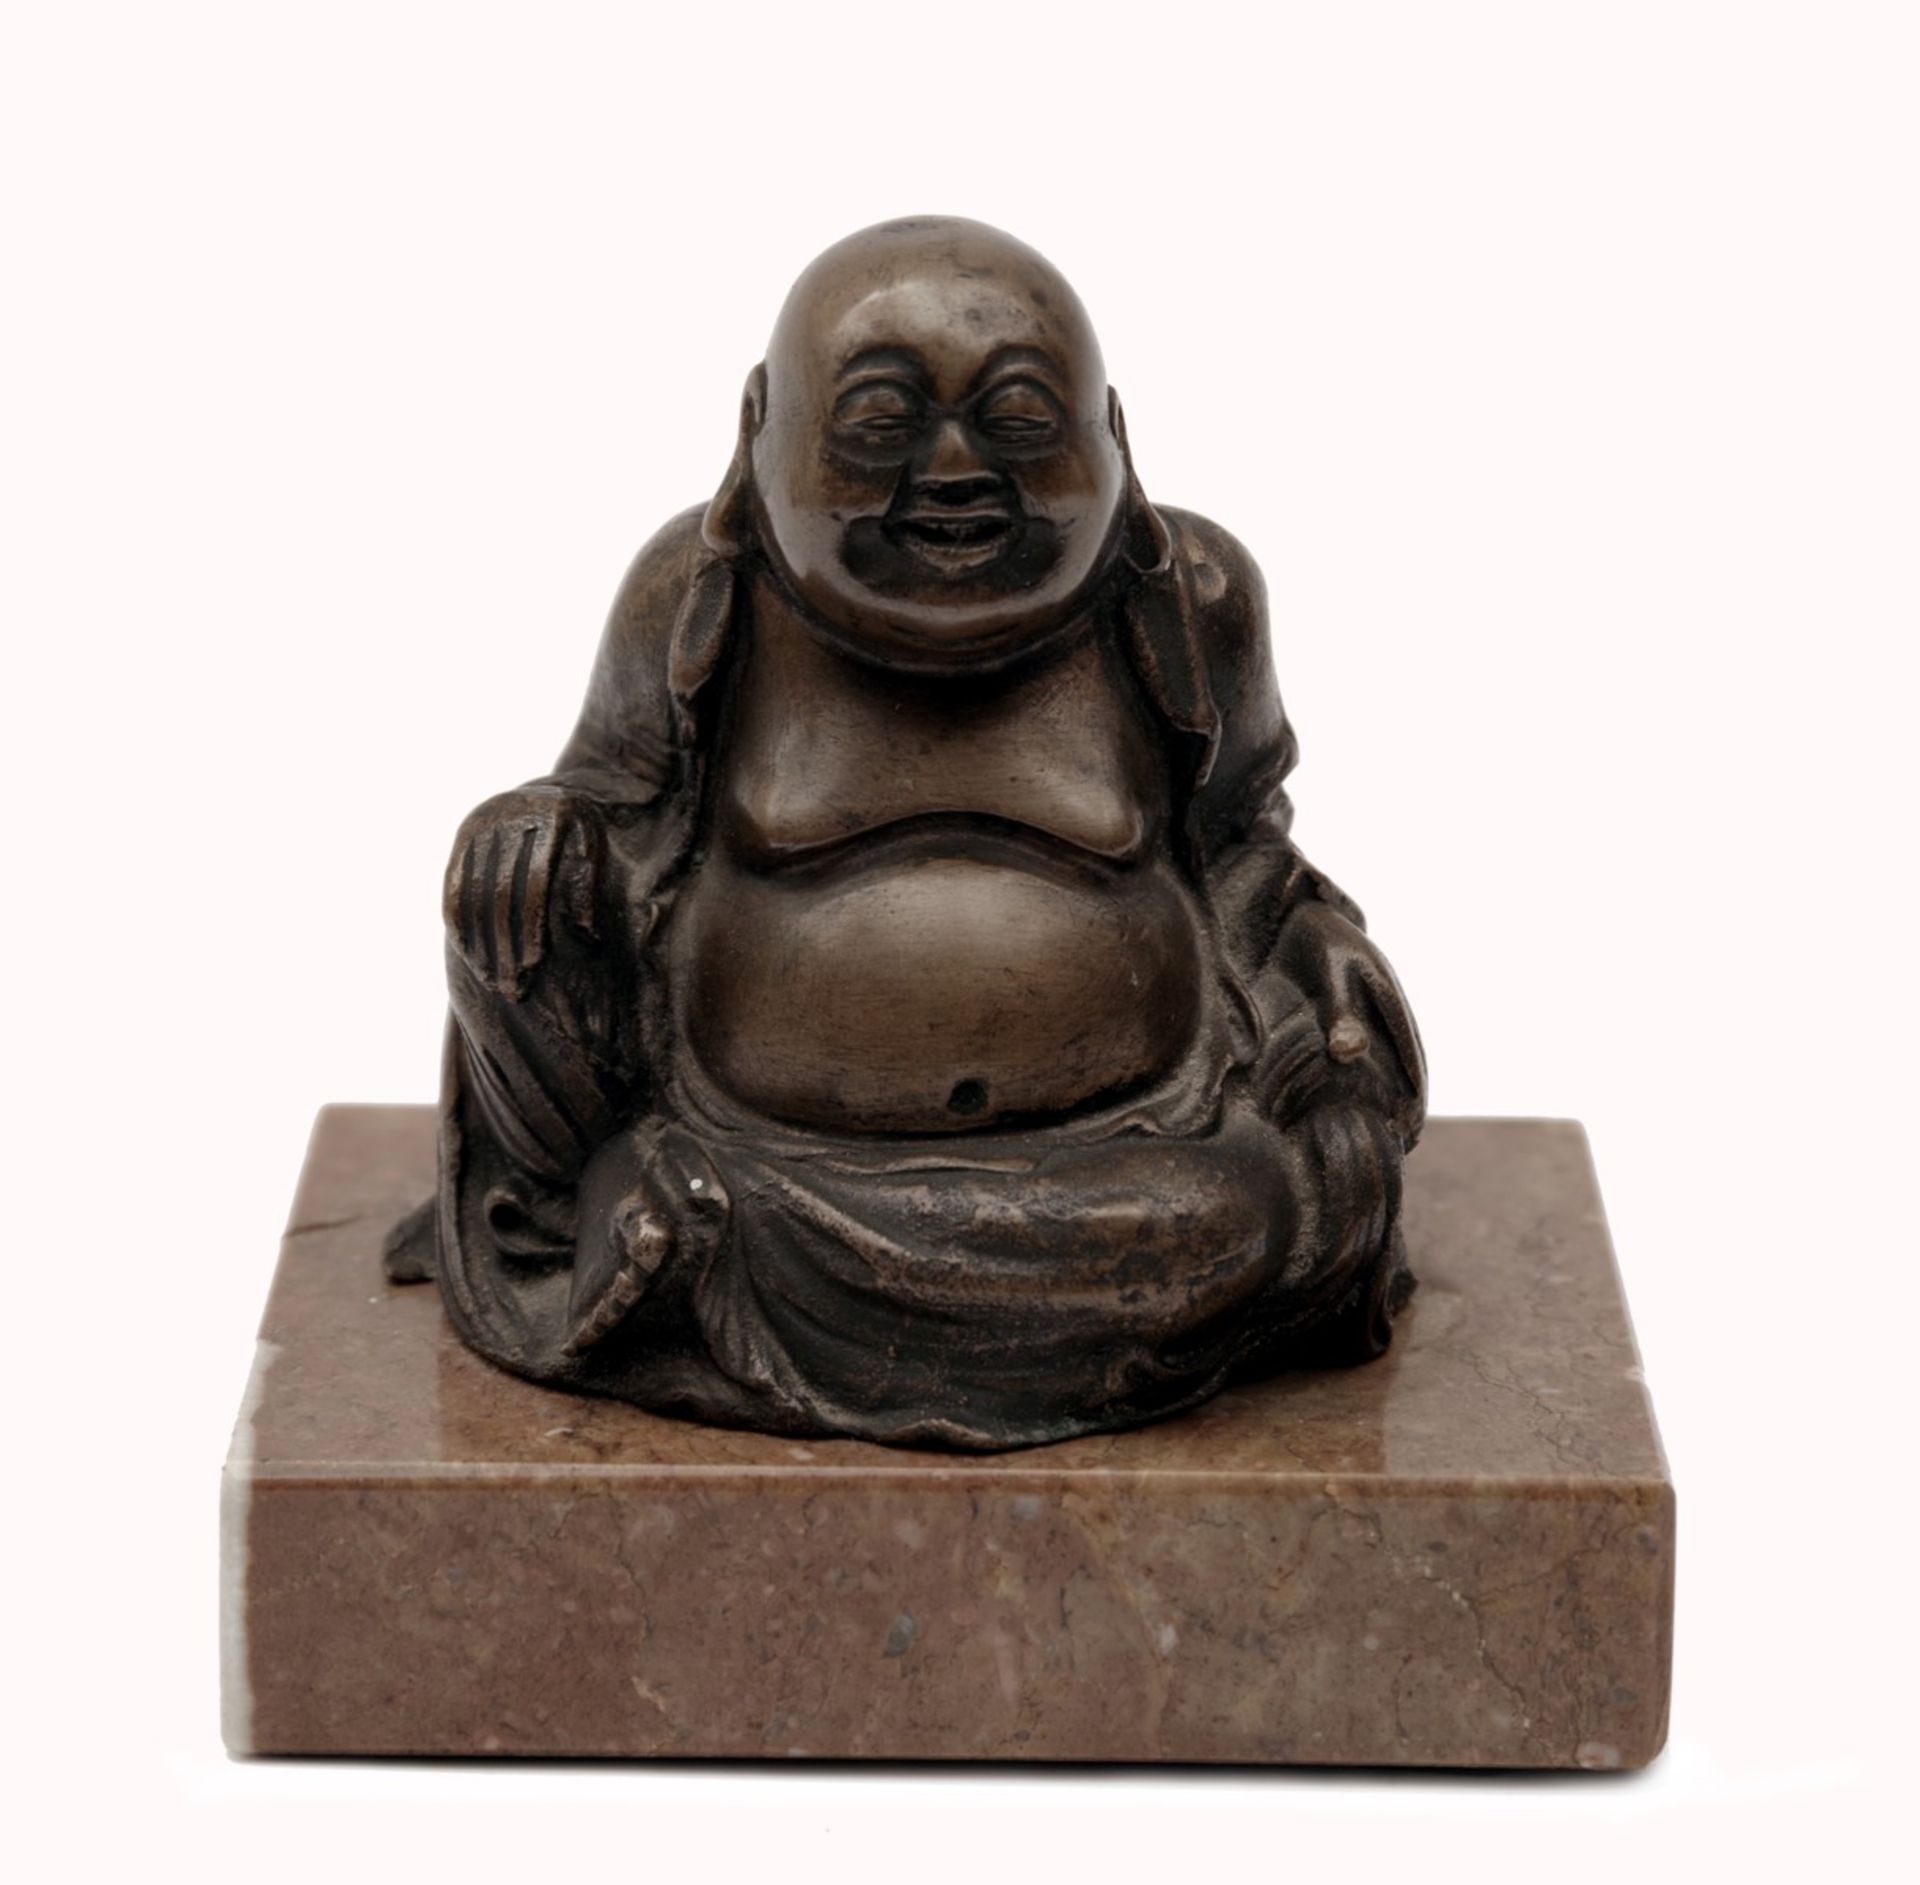 A Laughing Buddha